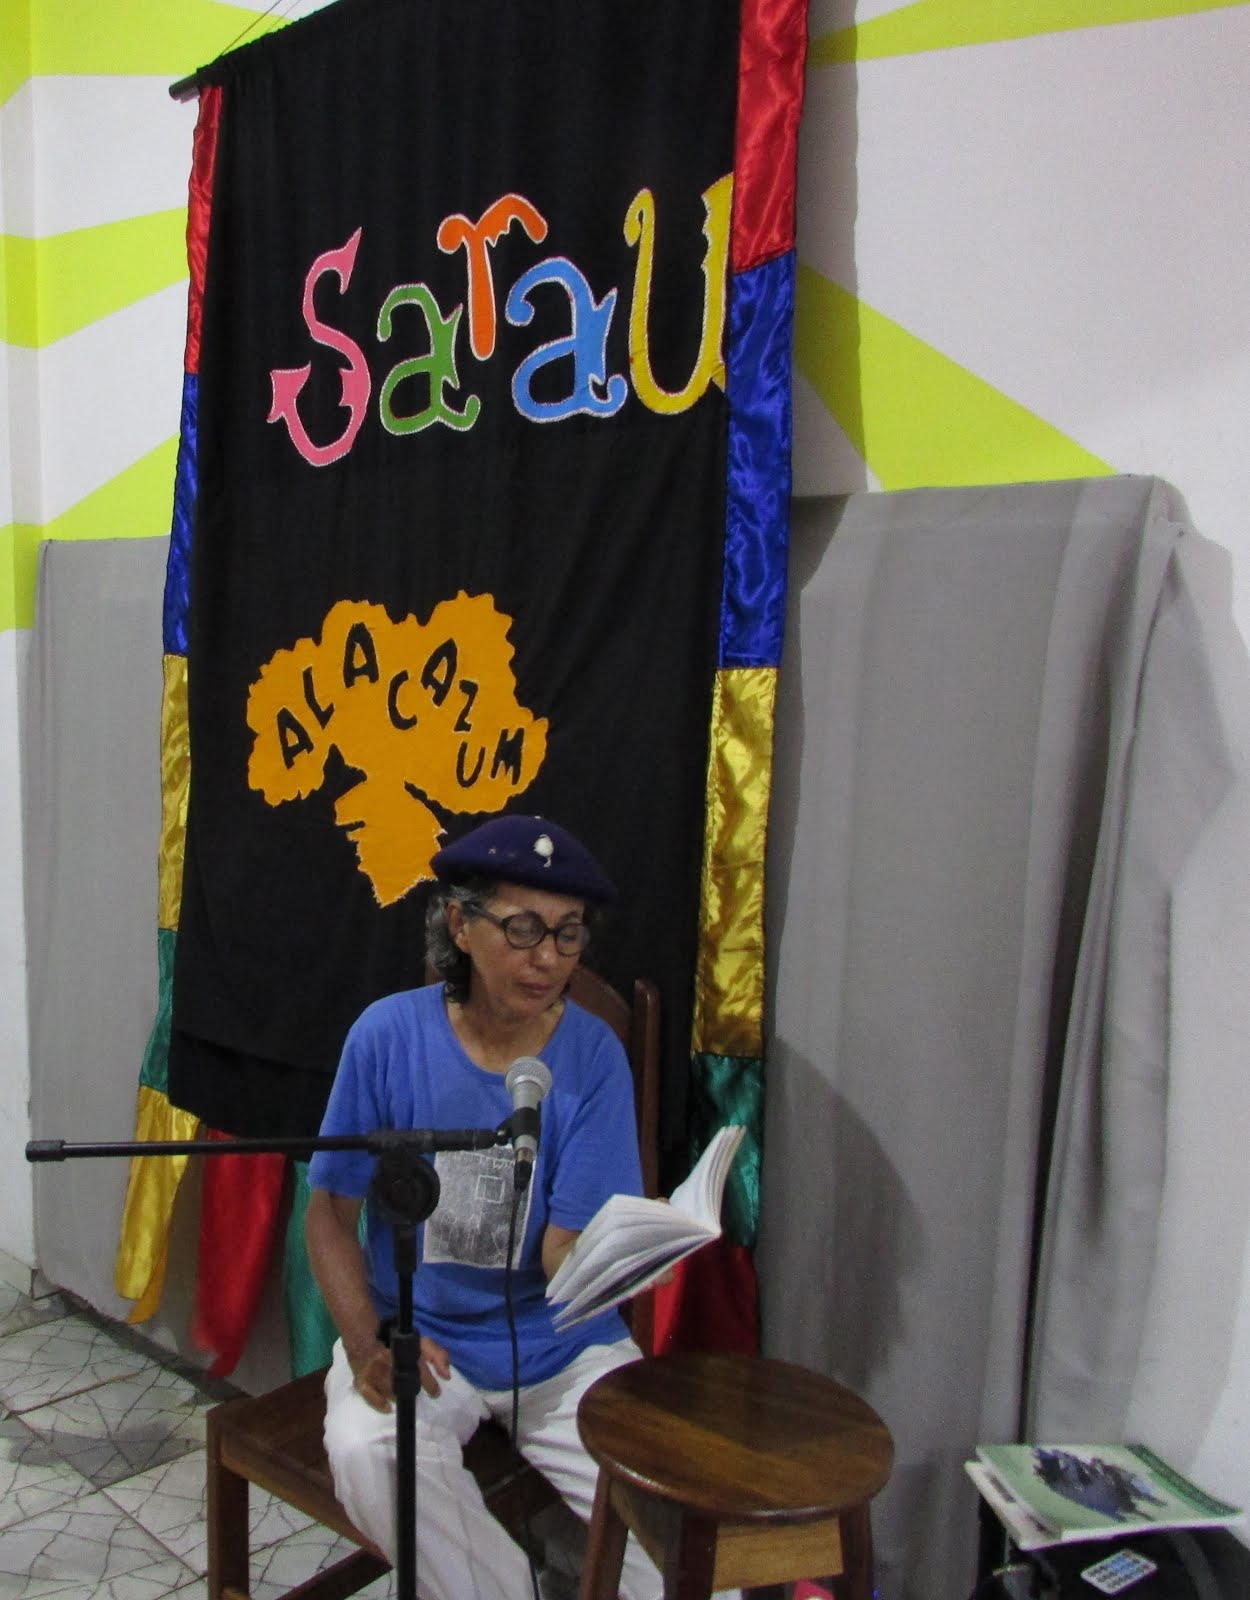 II Sarau Alacazum 2018